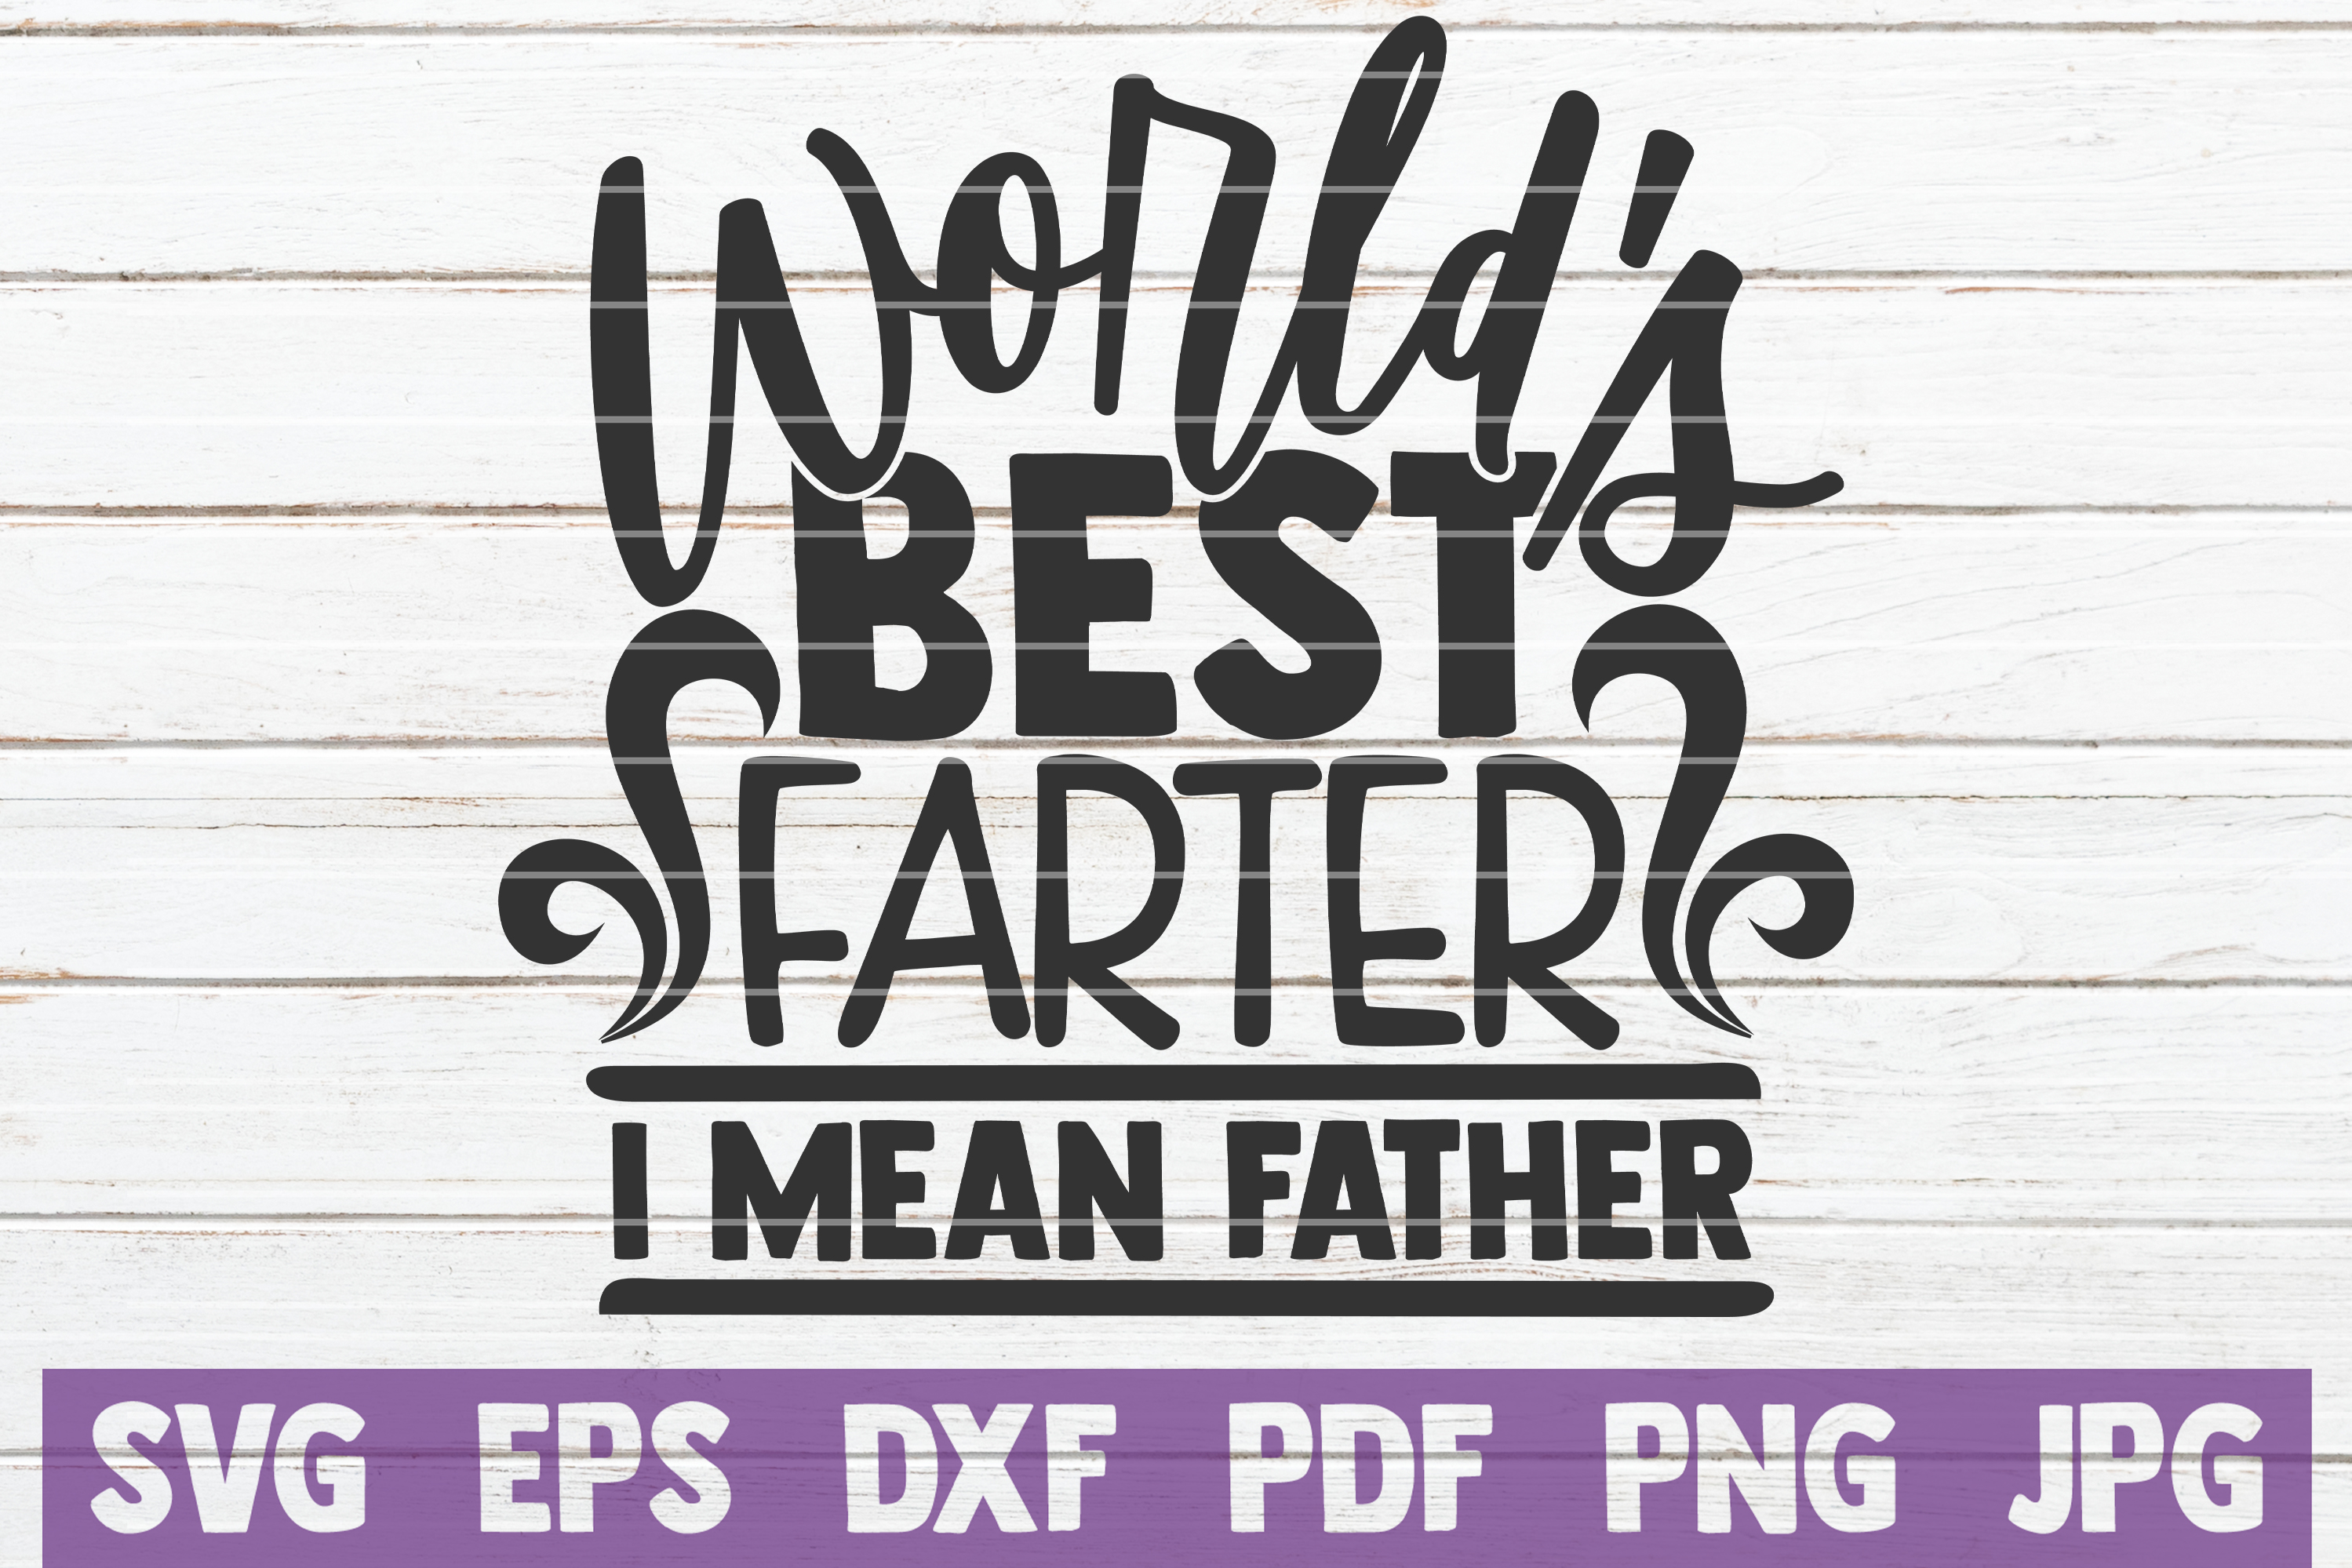 Download World's Best Farter I Mean Father SVG Cut File